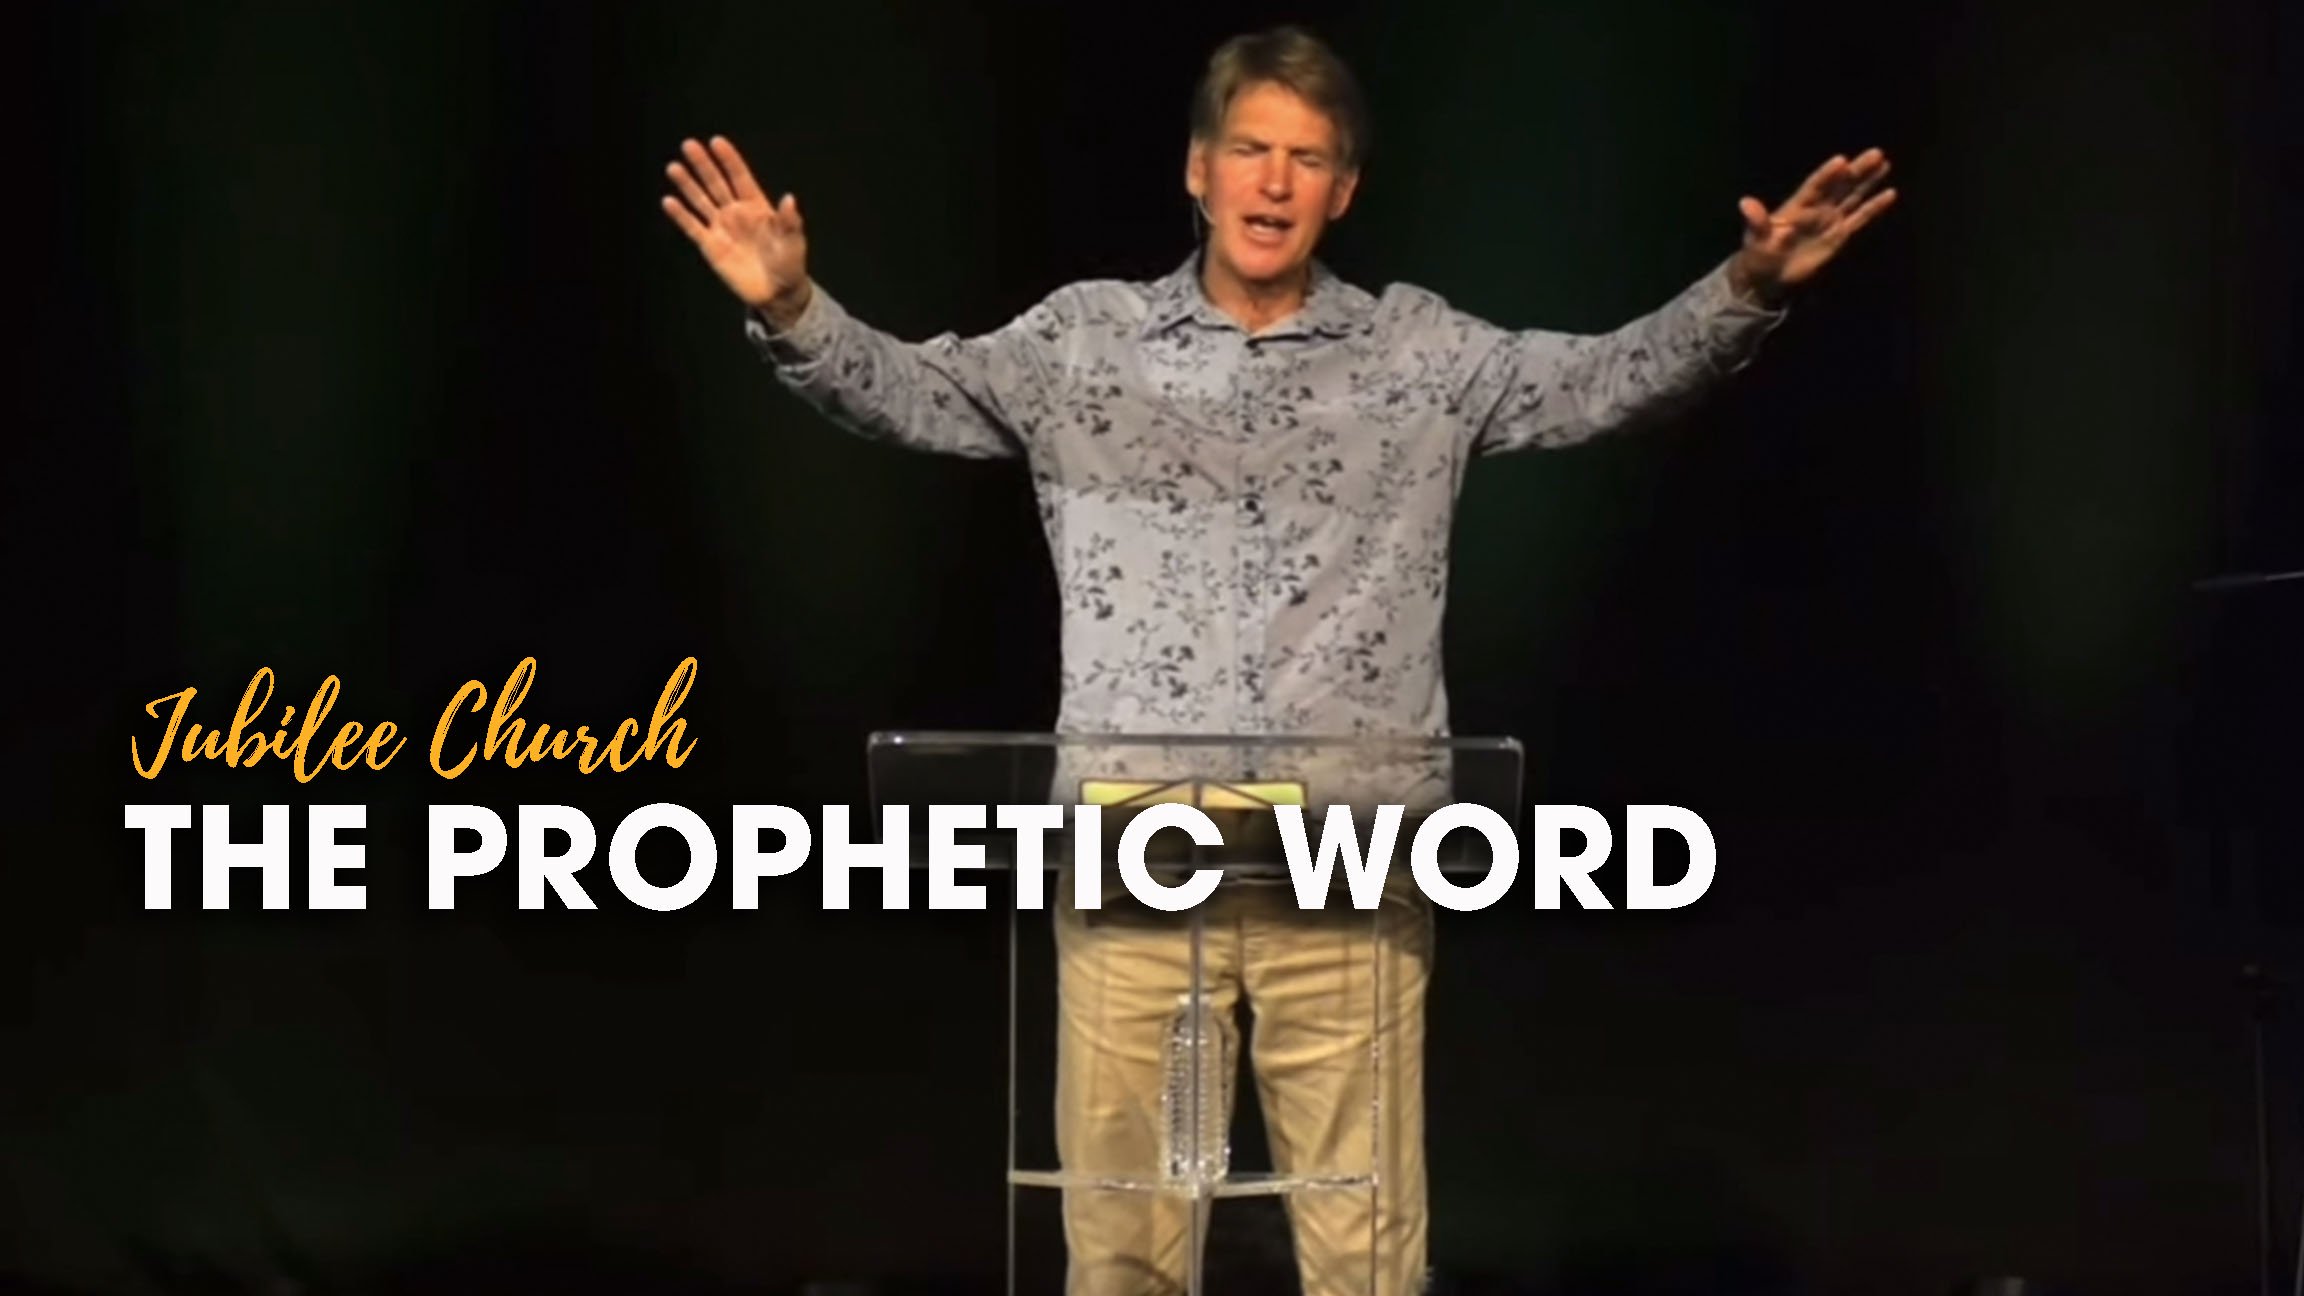 The Prophetic Word